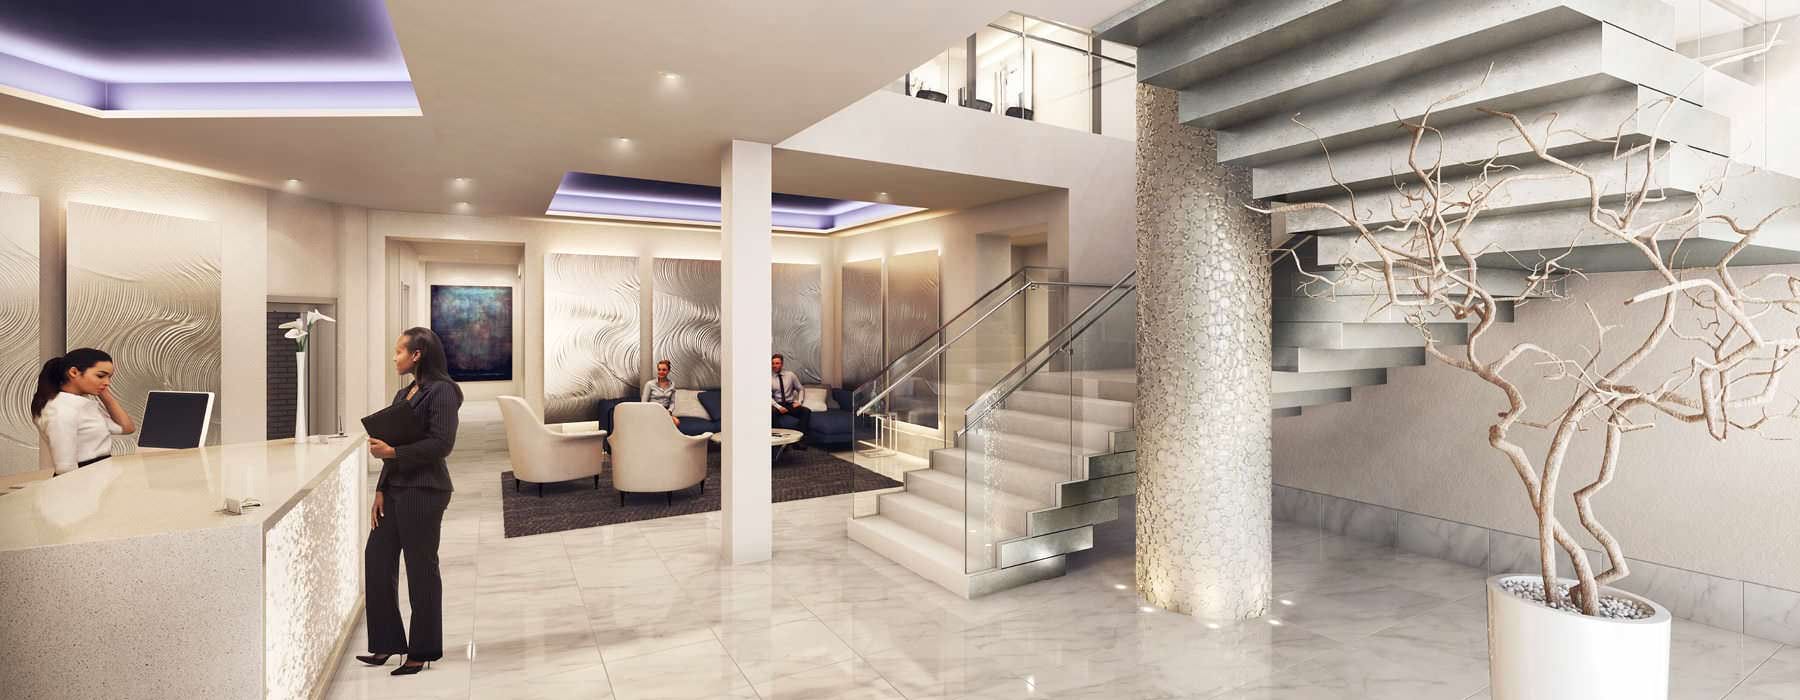 rendering of stylish lobby